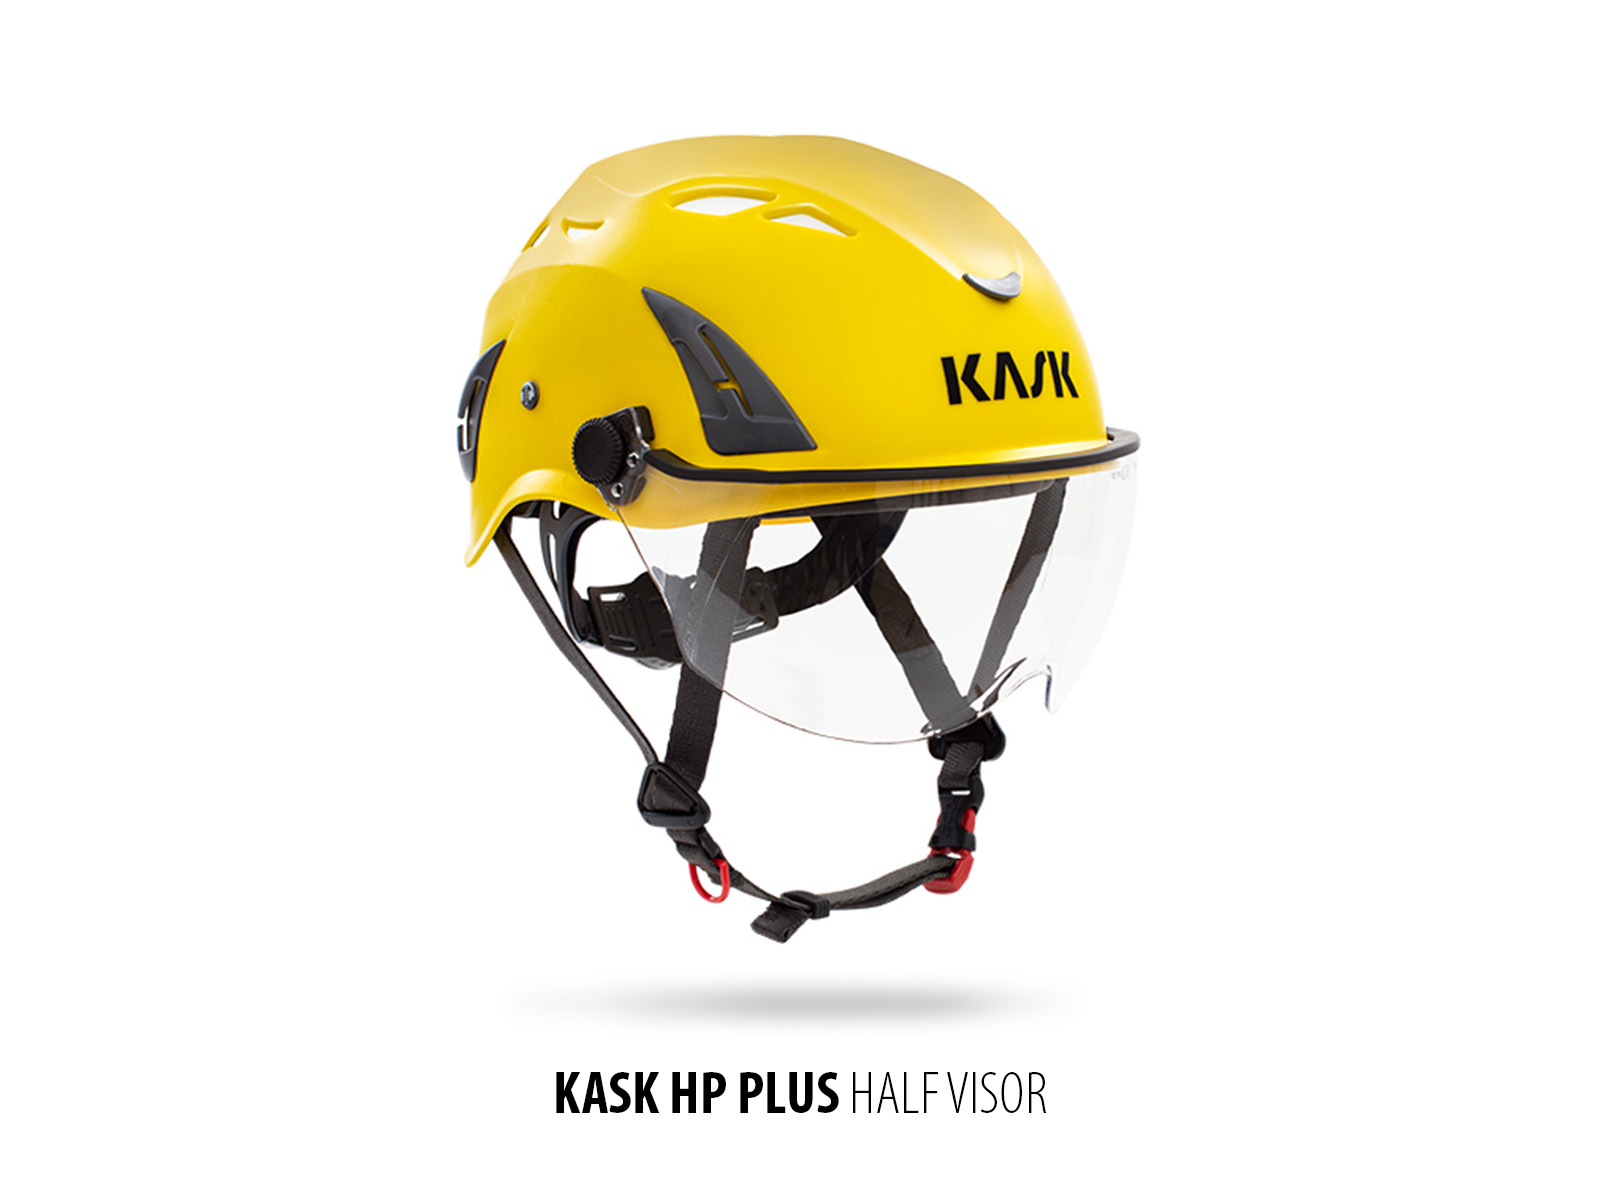 KASK-HP-half-visor-2.jpg